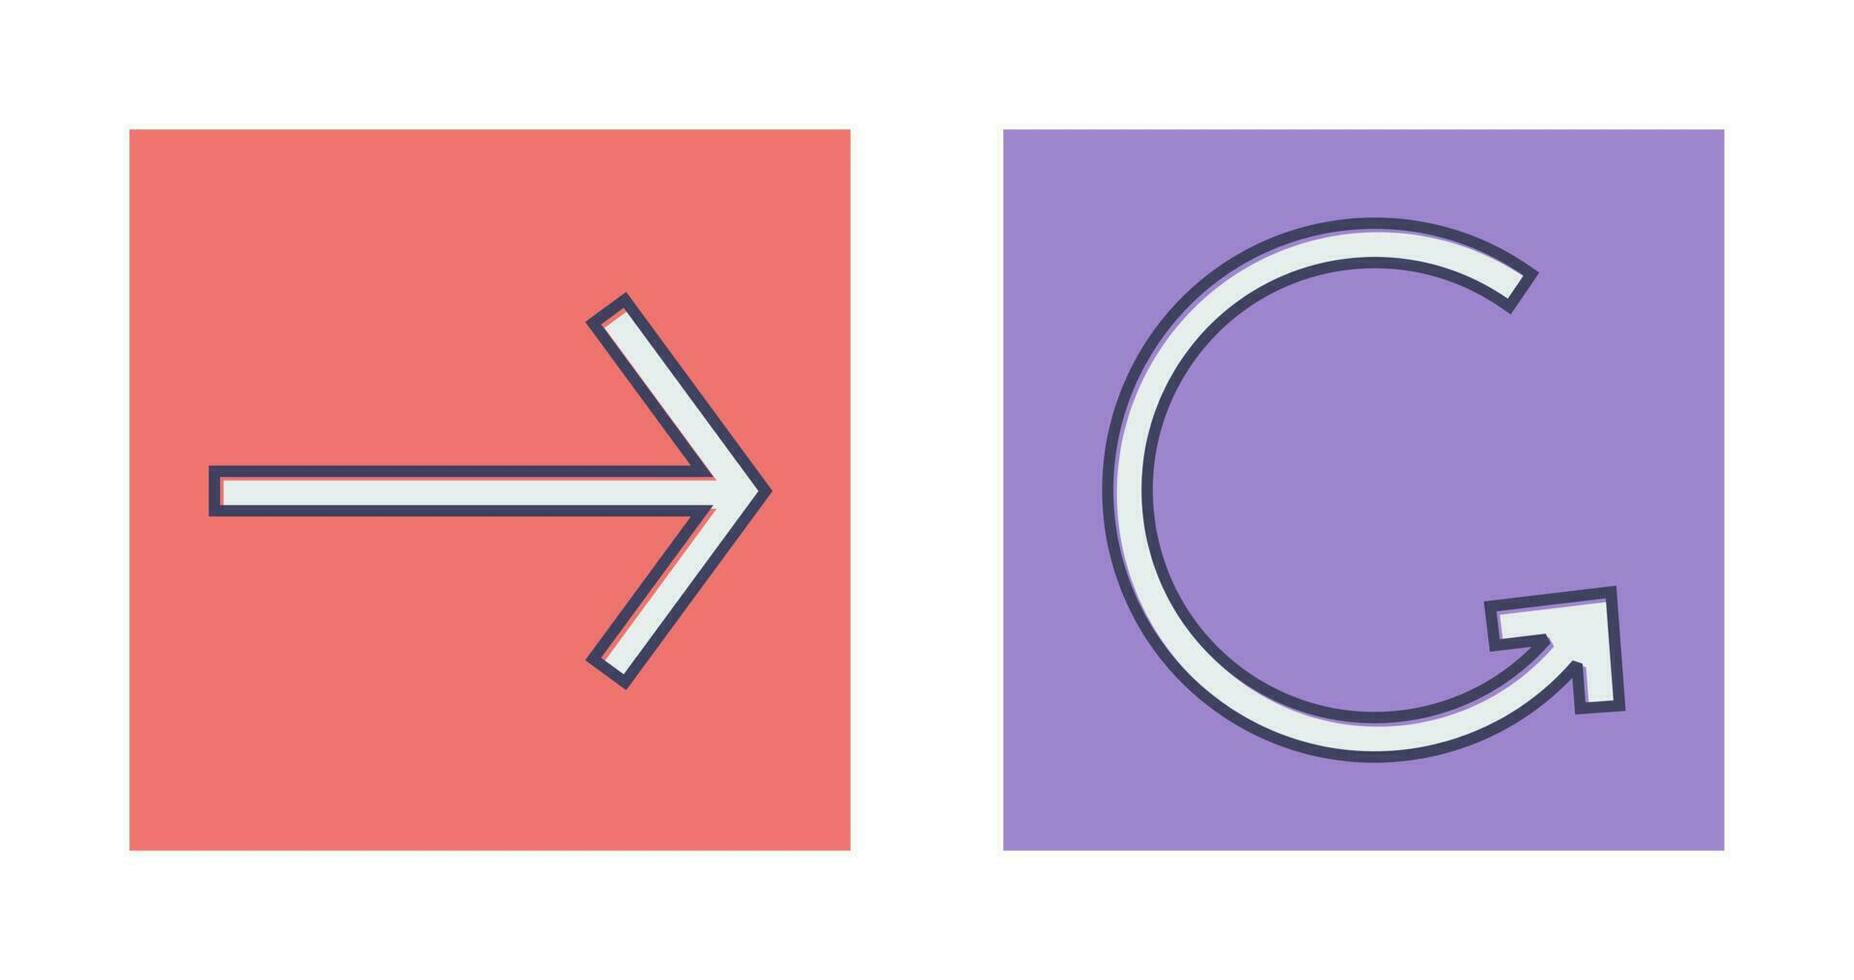 Vektorsymbol mit Pfeil nach rechts hinten vektor